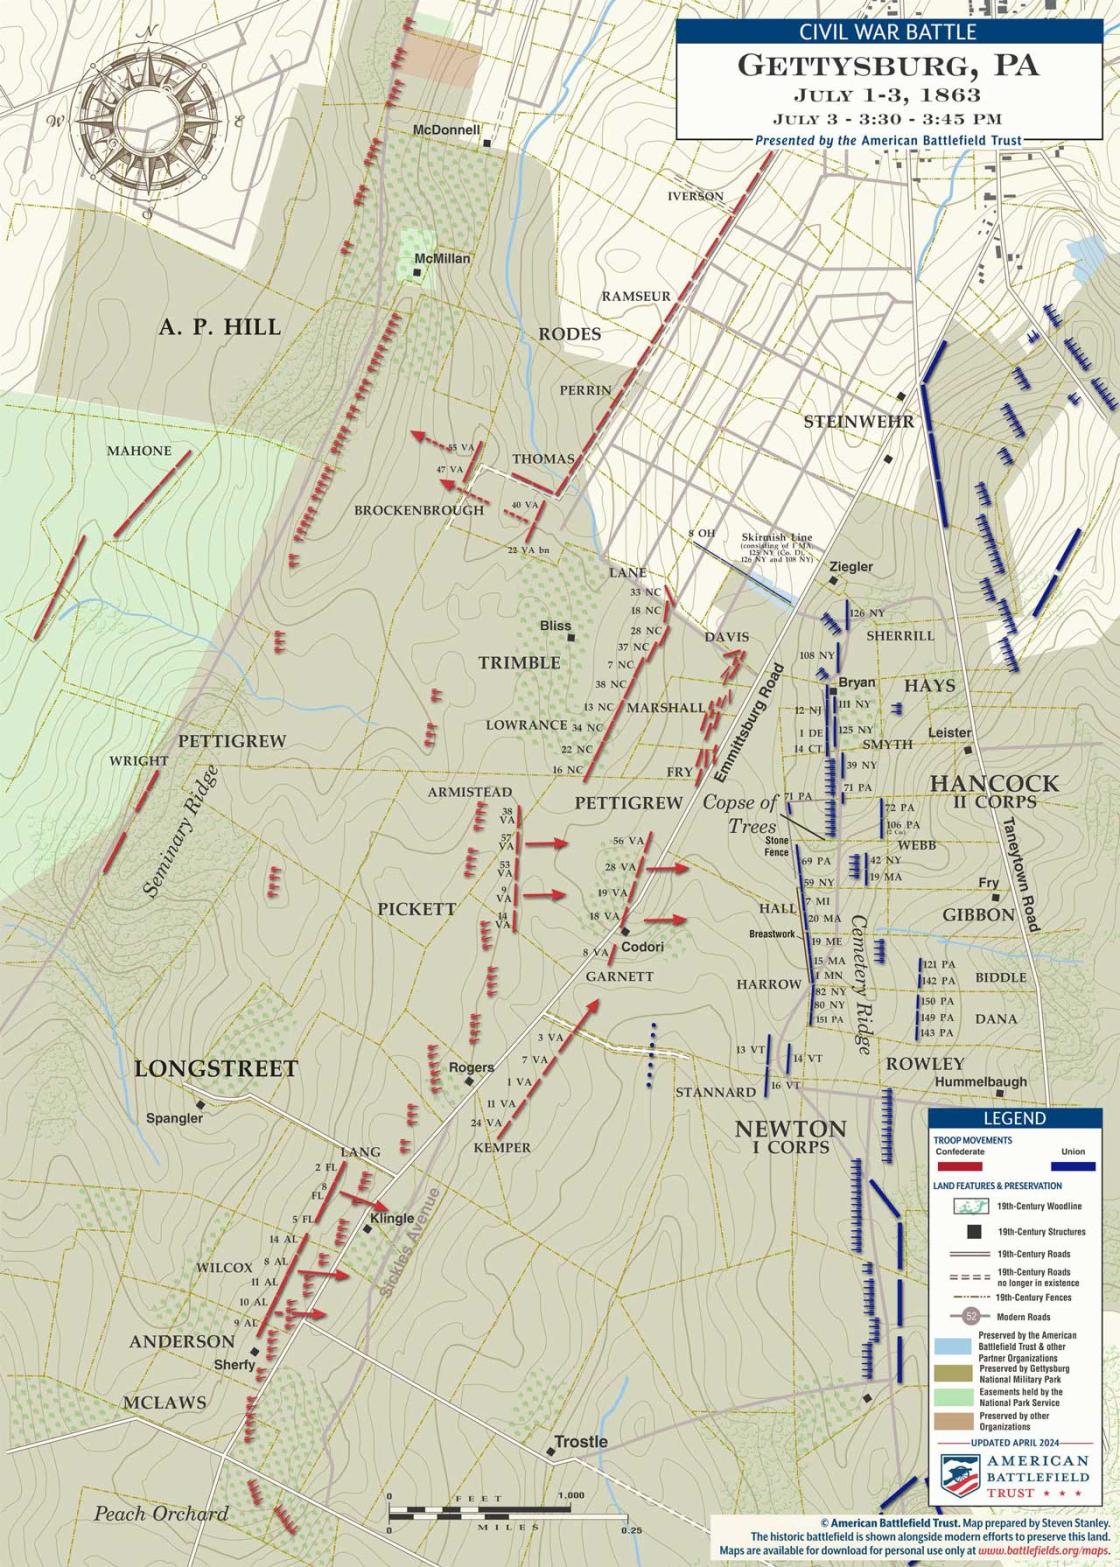 Gettysburg | Pickett's Charge | July 3, 1863 | 3:30-3:45 pm